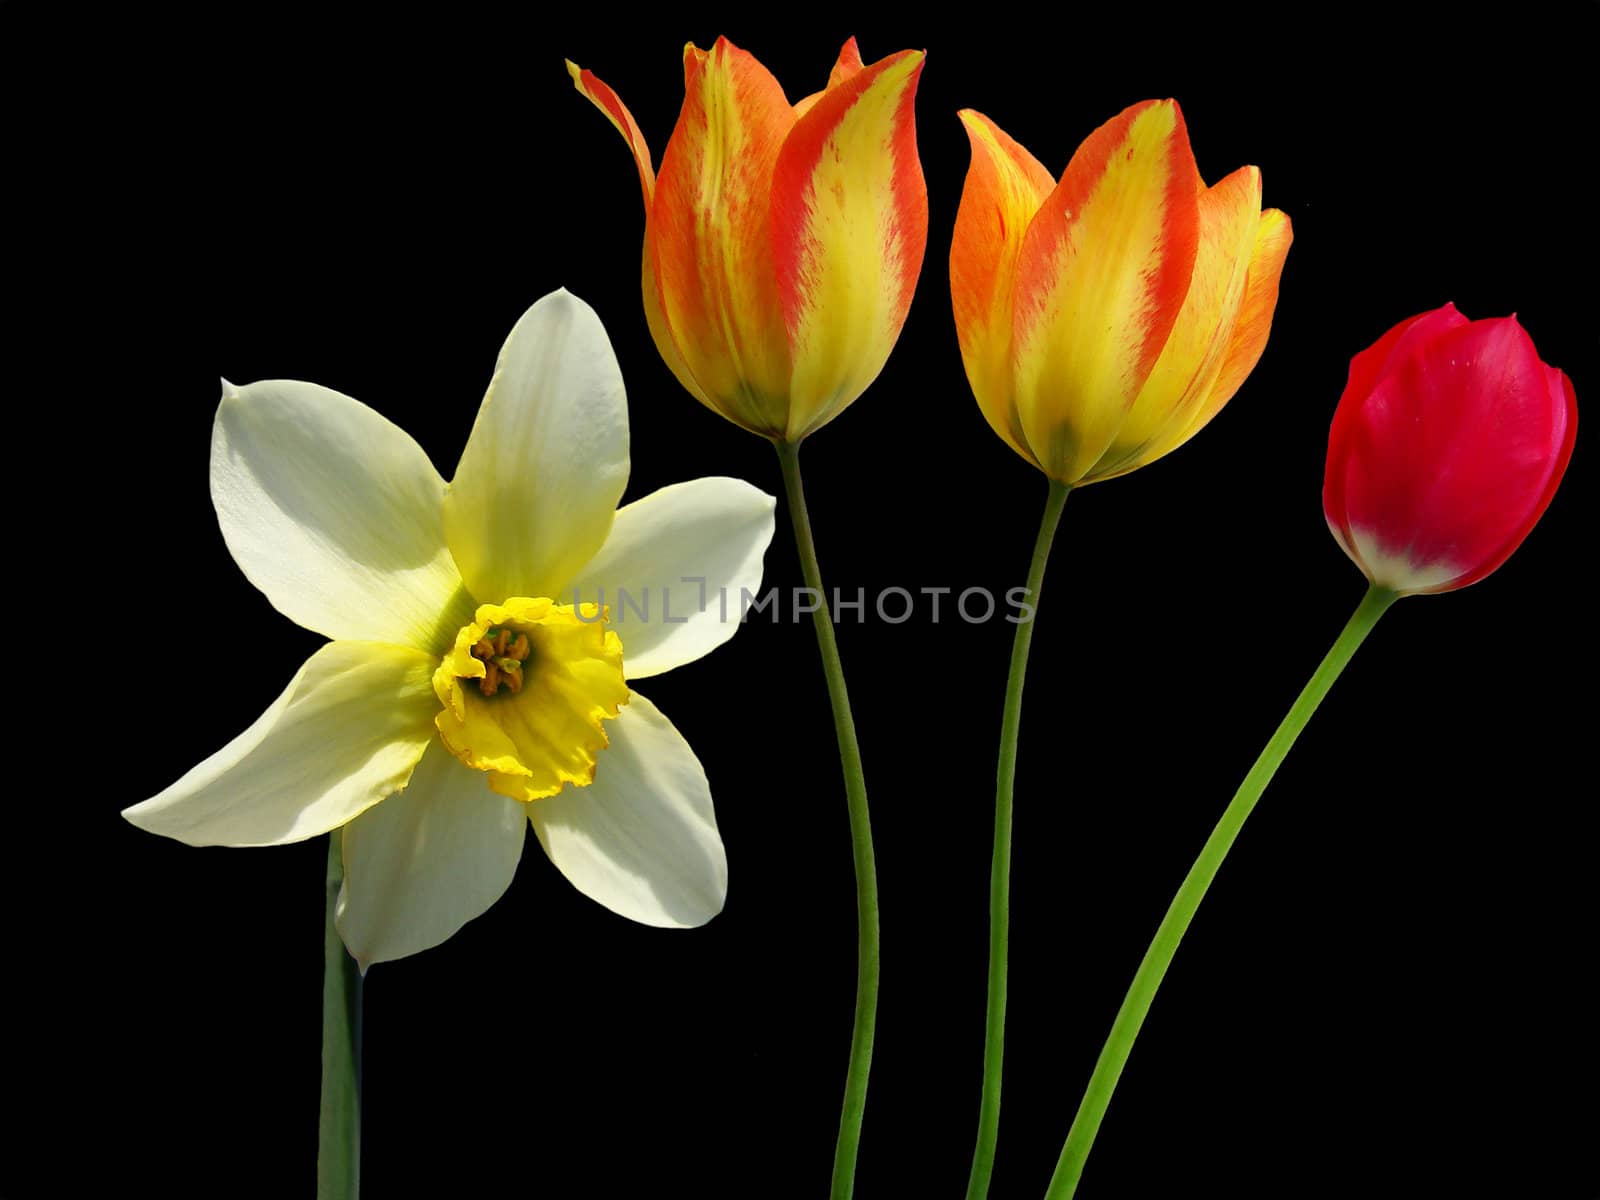 Spring daffodils and tulips  by karelindi